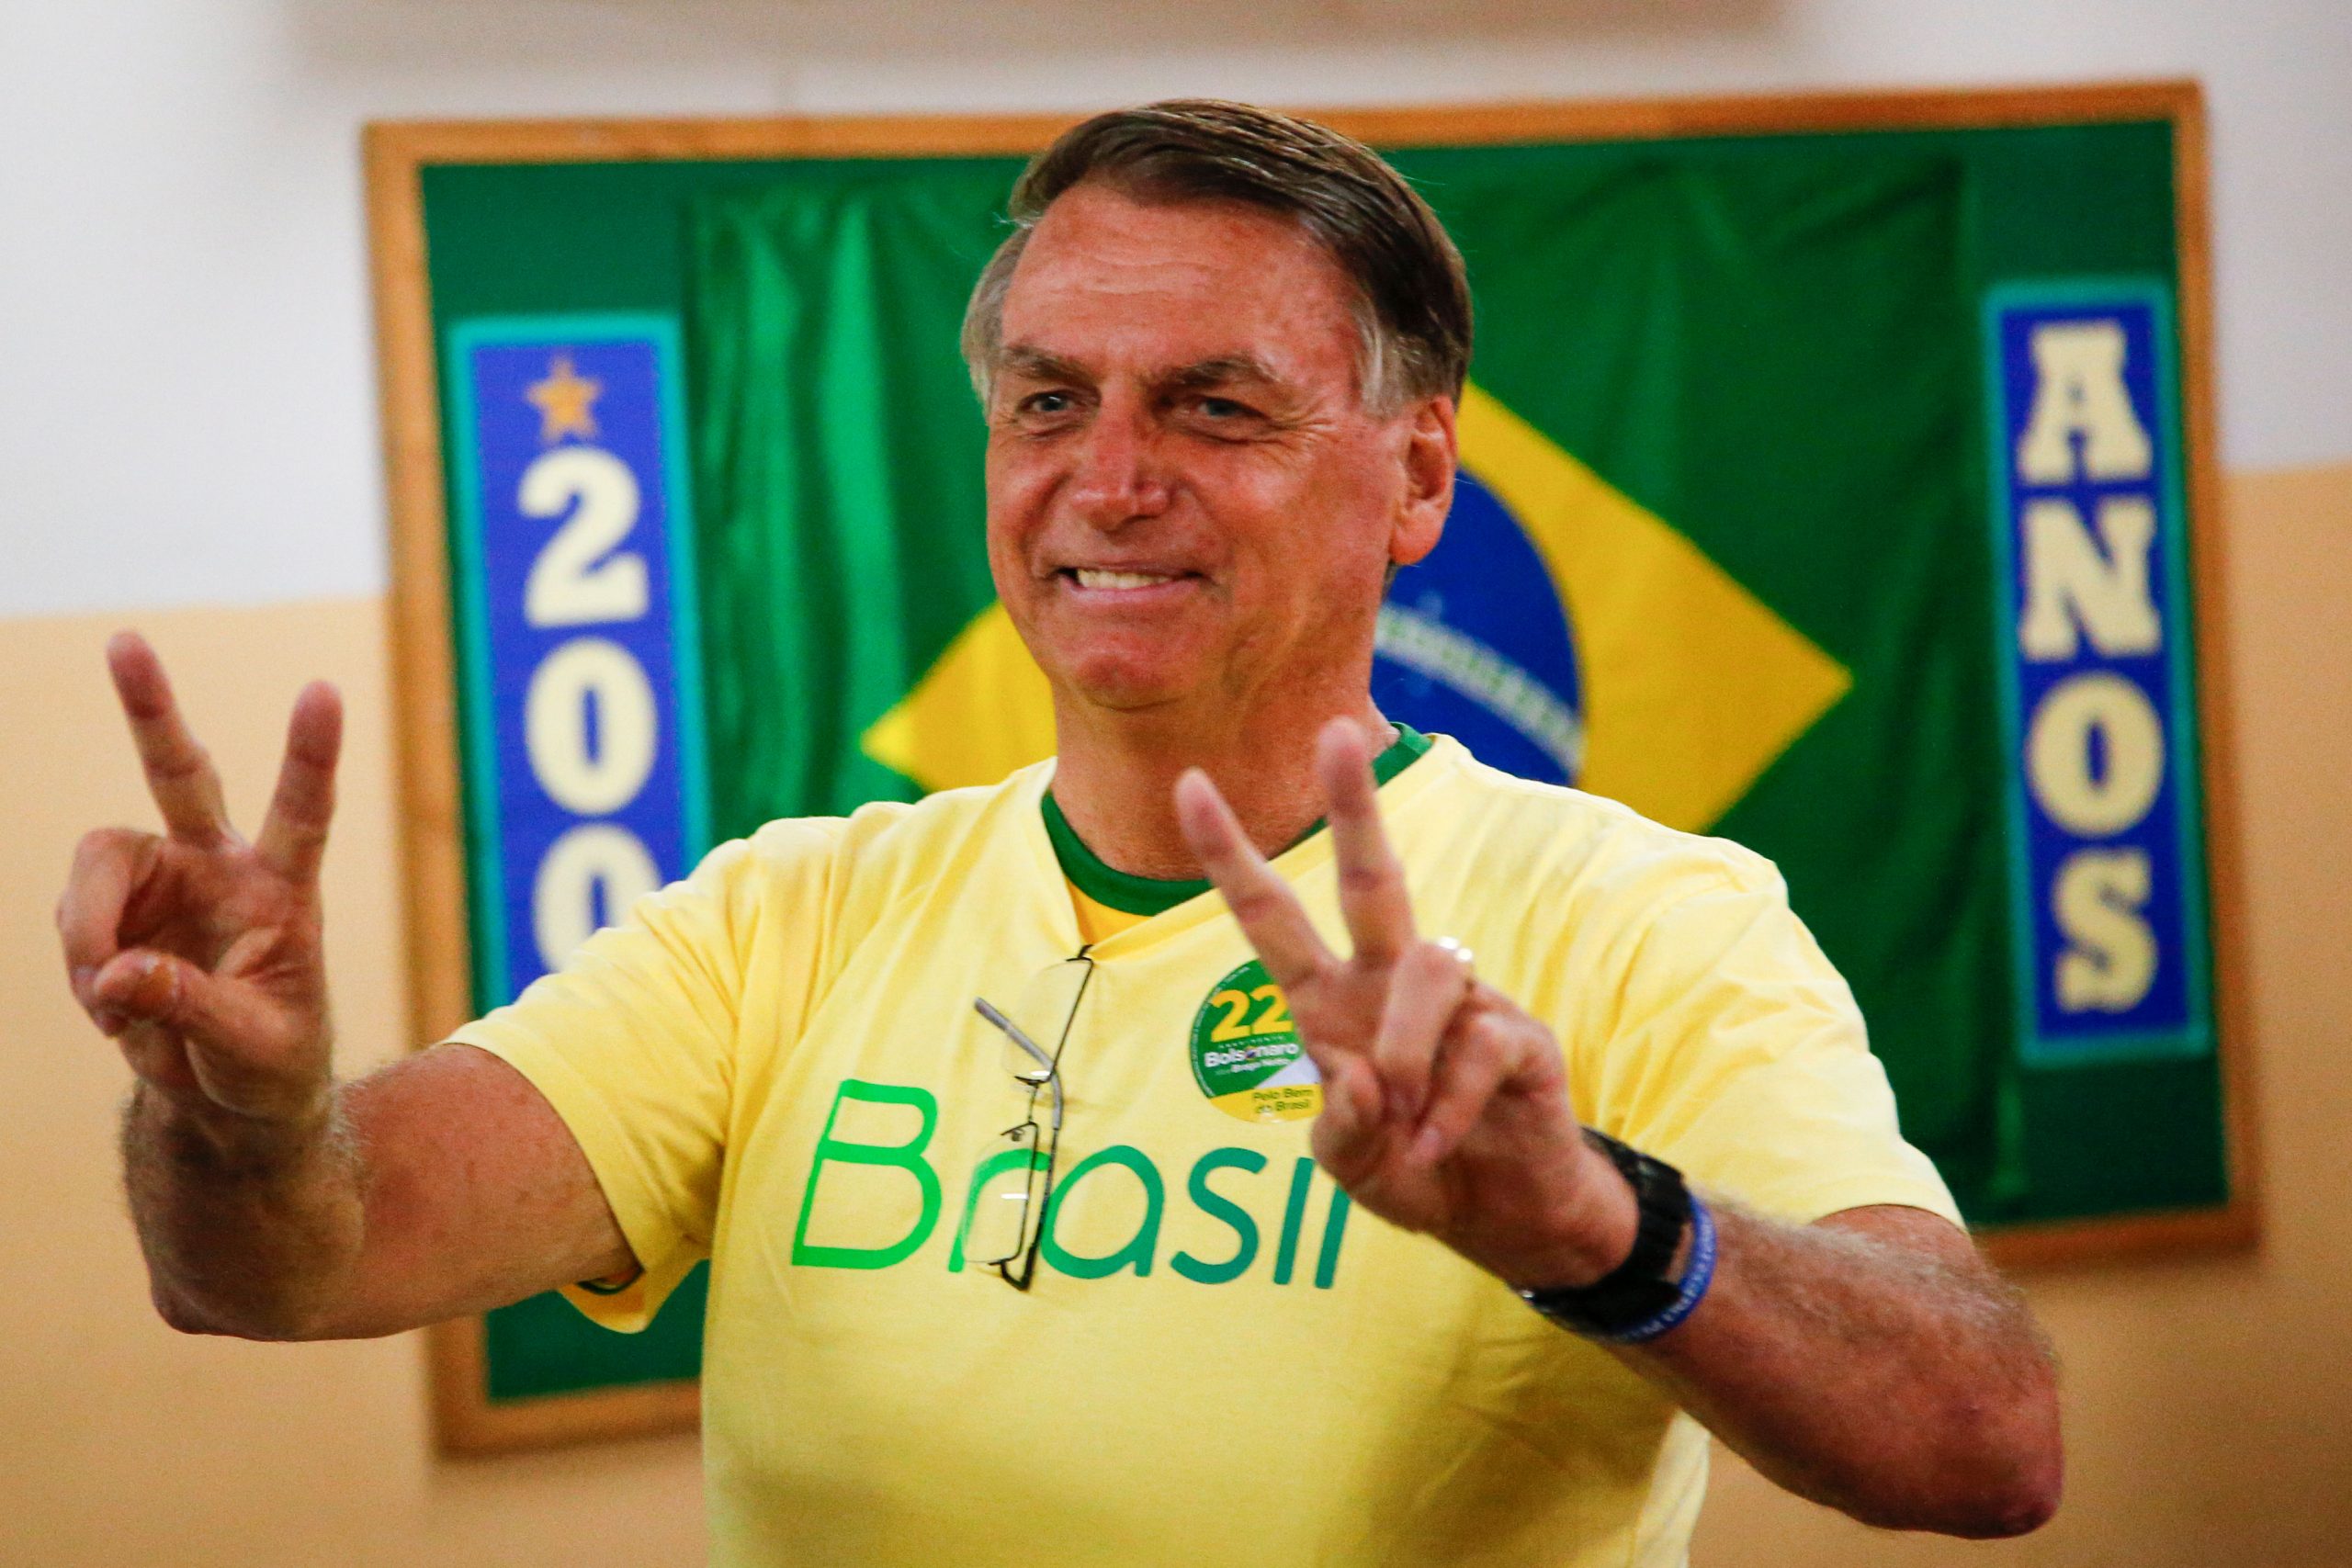 Who is Jair Bolsonaro?